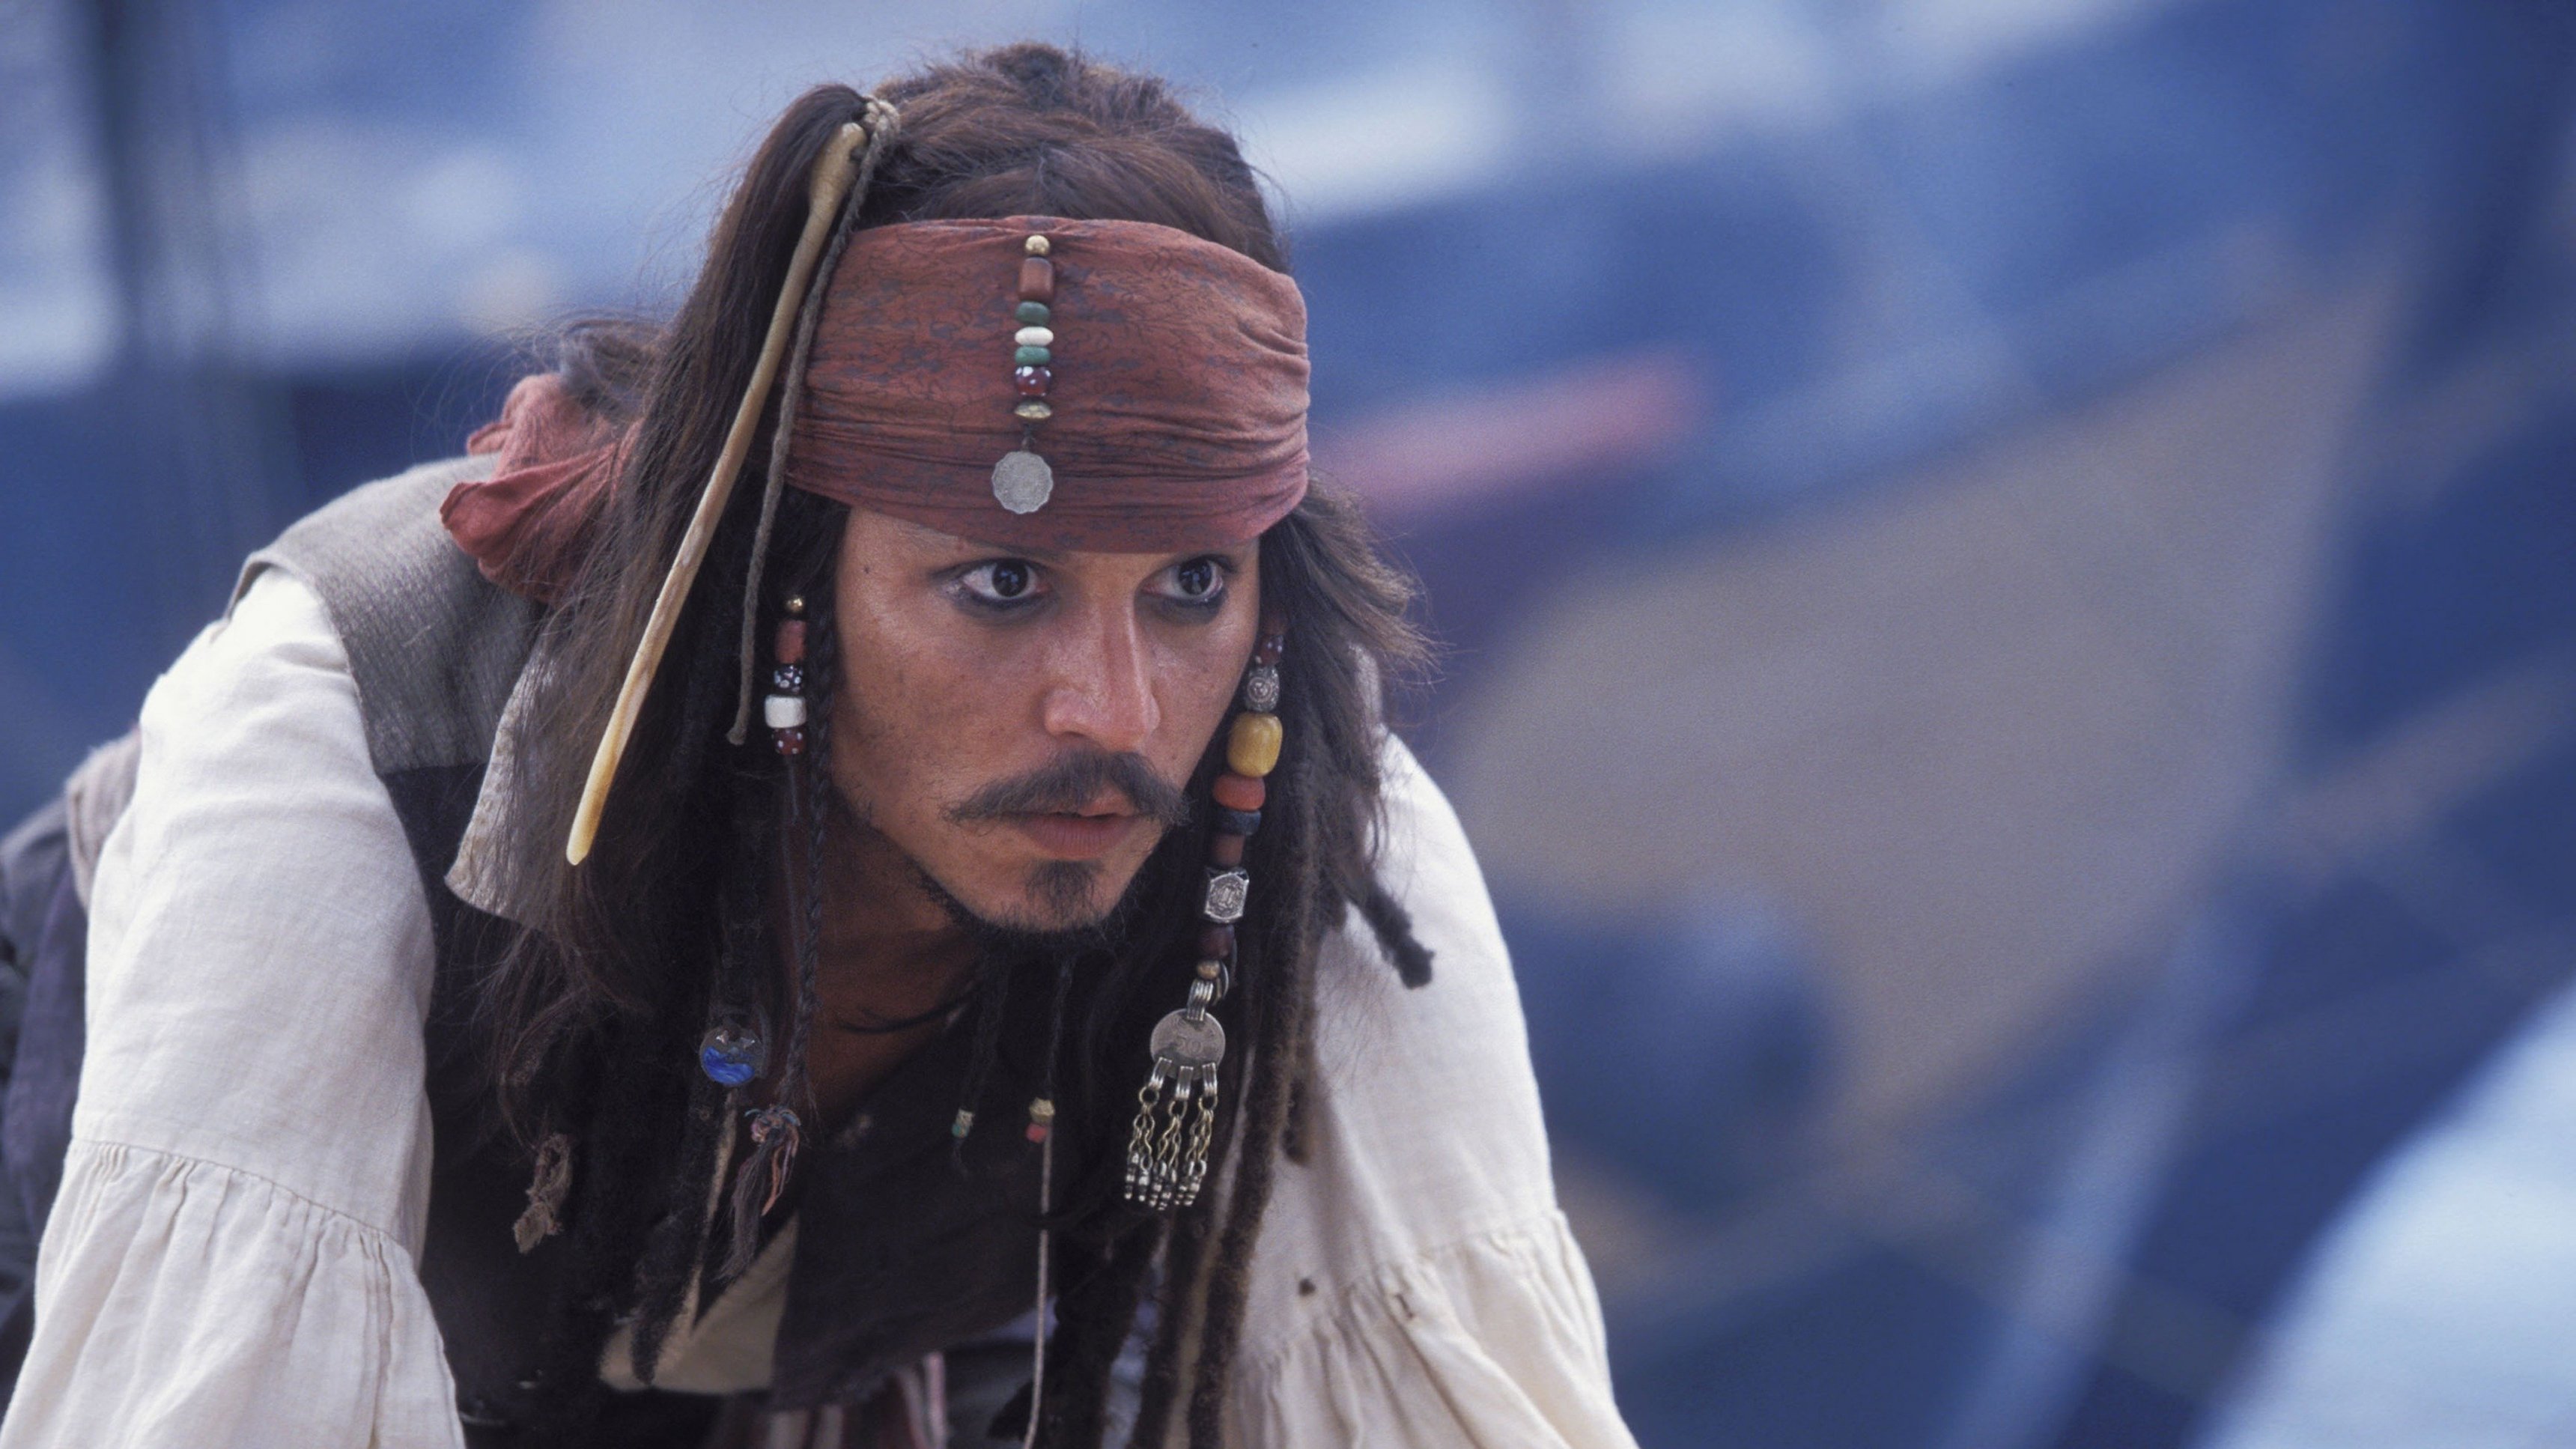 Pirates of the Caribbean: Svarta pärlans förbannelse